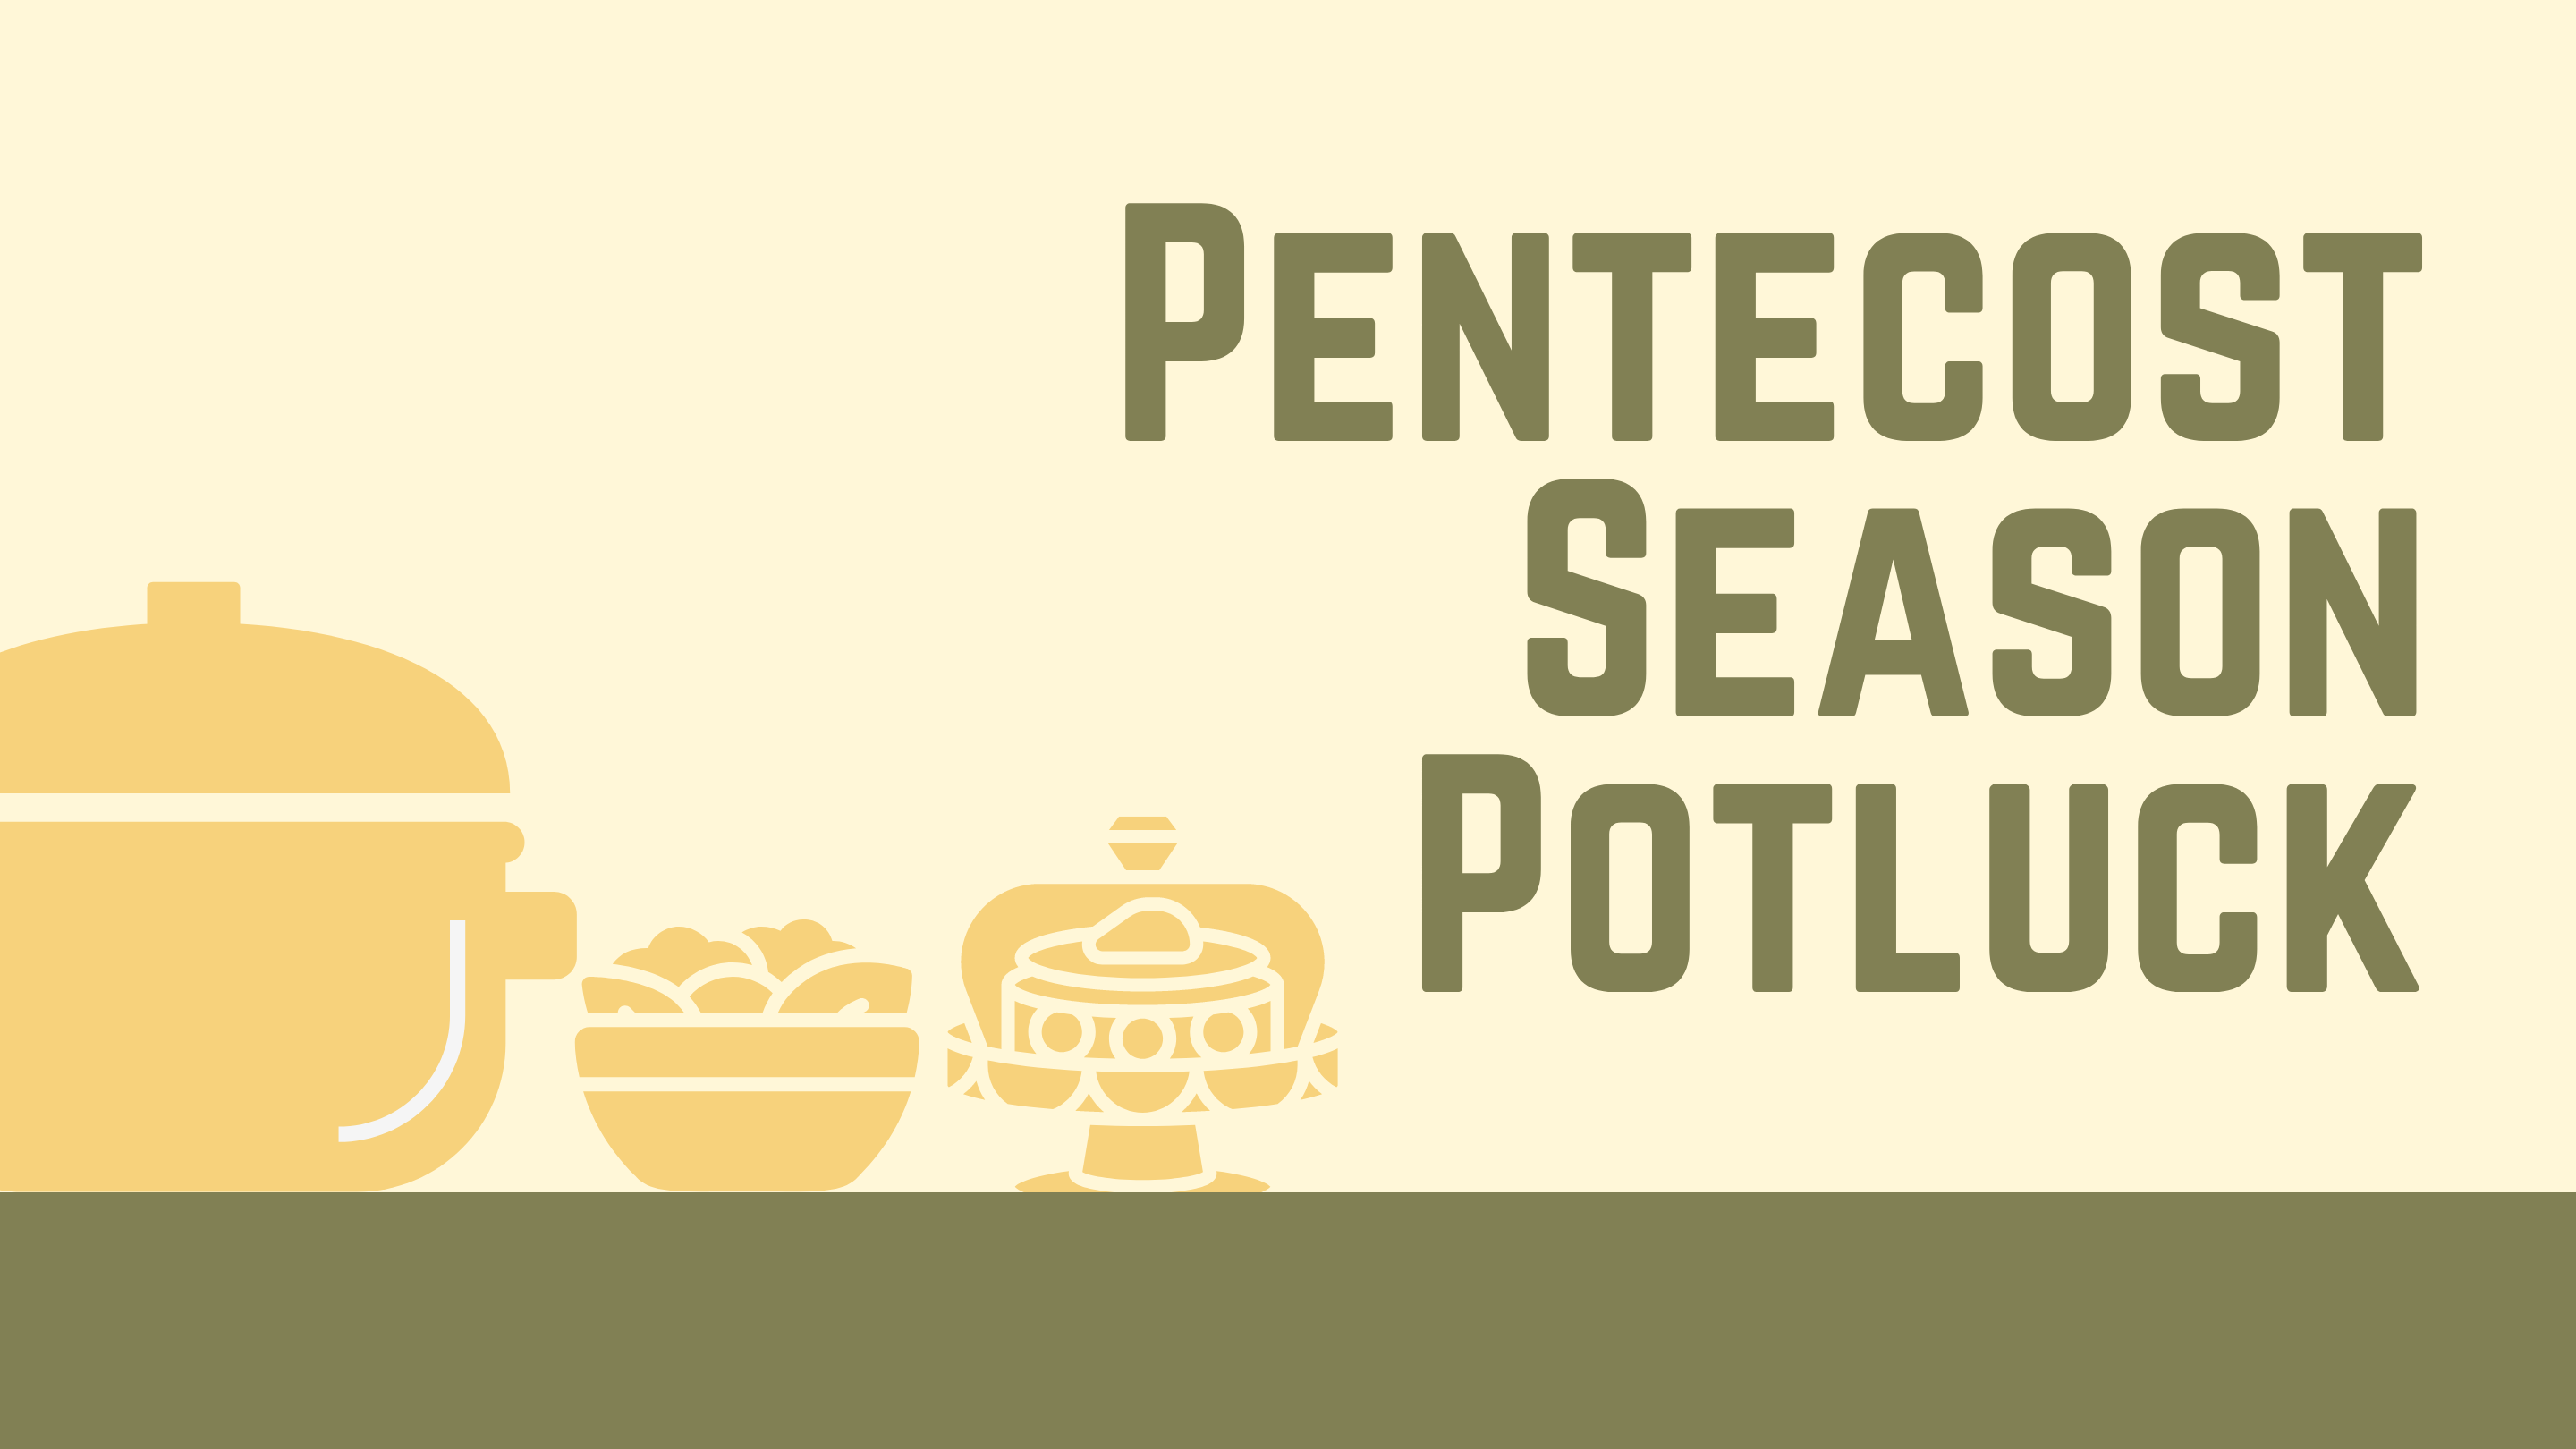 Pentecost Season Potluck